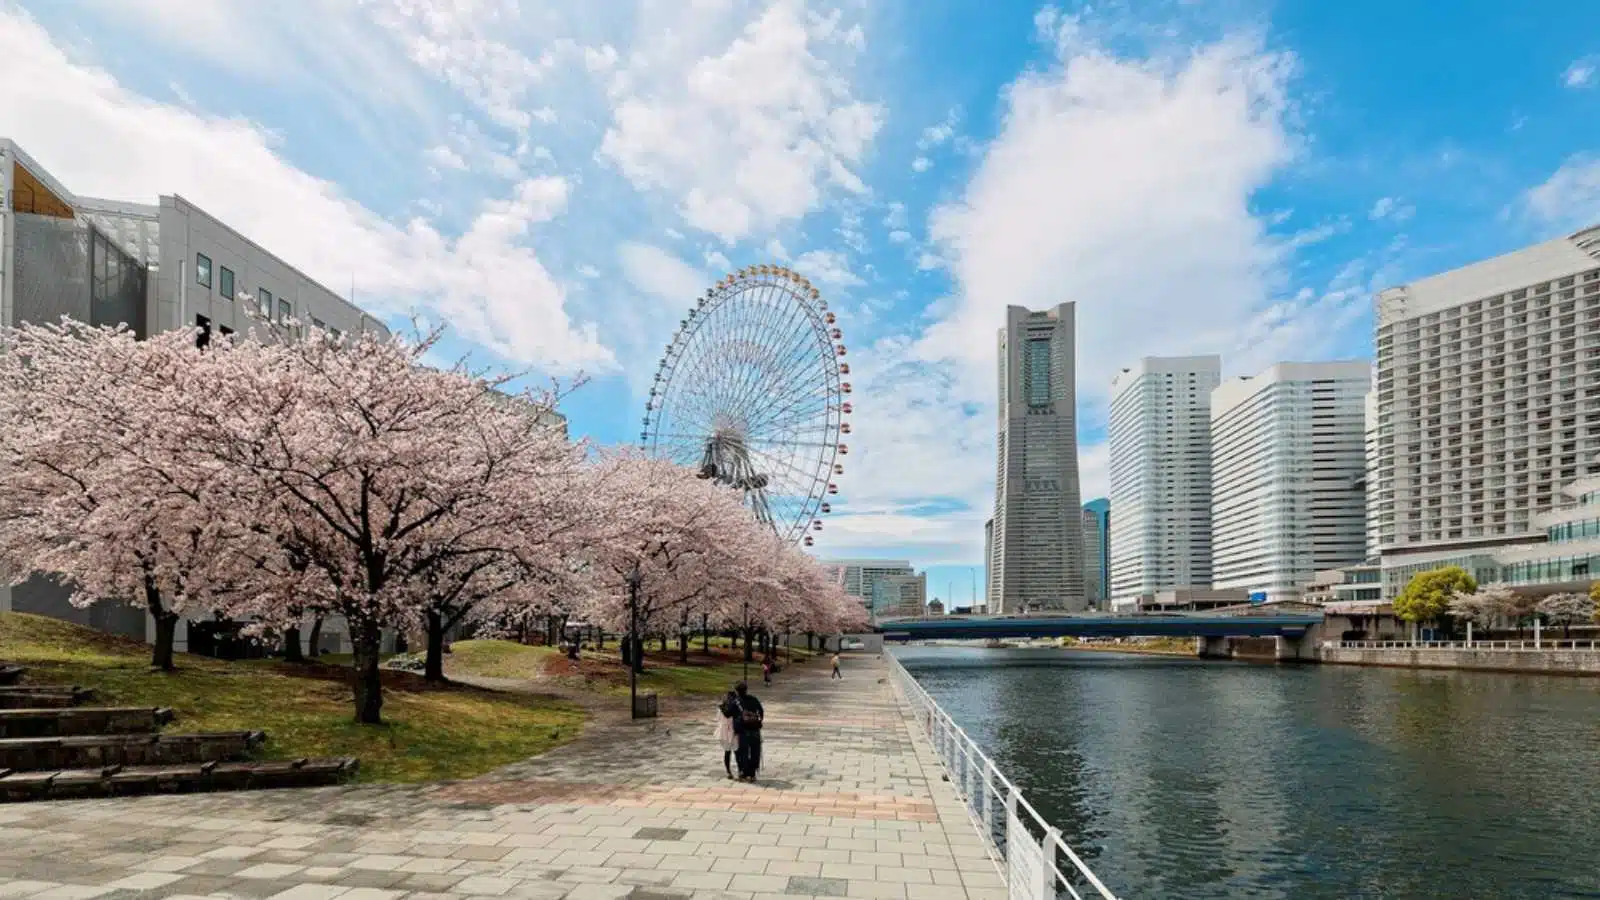 Spring scenery of Yokohama Minatomirai Bay area, with view of high rise skyscrapers in background, a giant Ferris wheel in the amusement park & beautiful sakura blossom trees along a seaside promenade